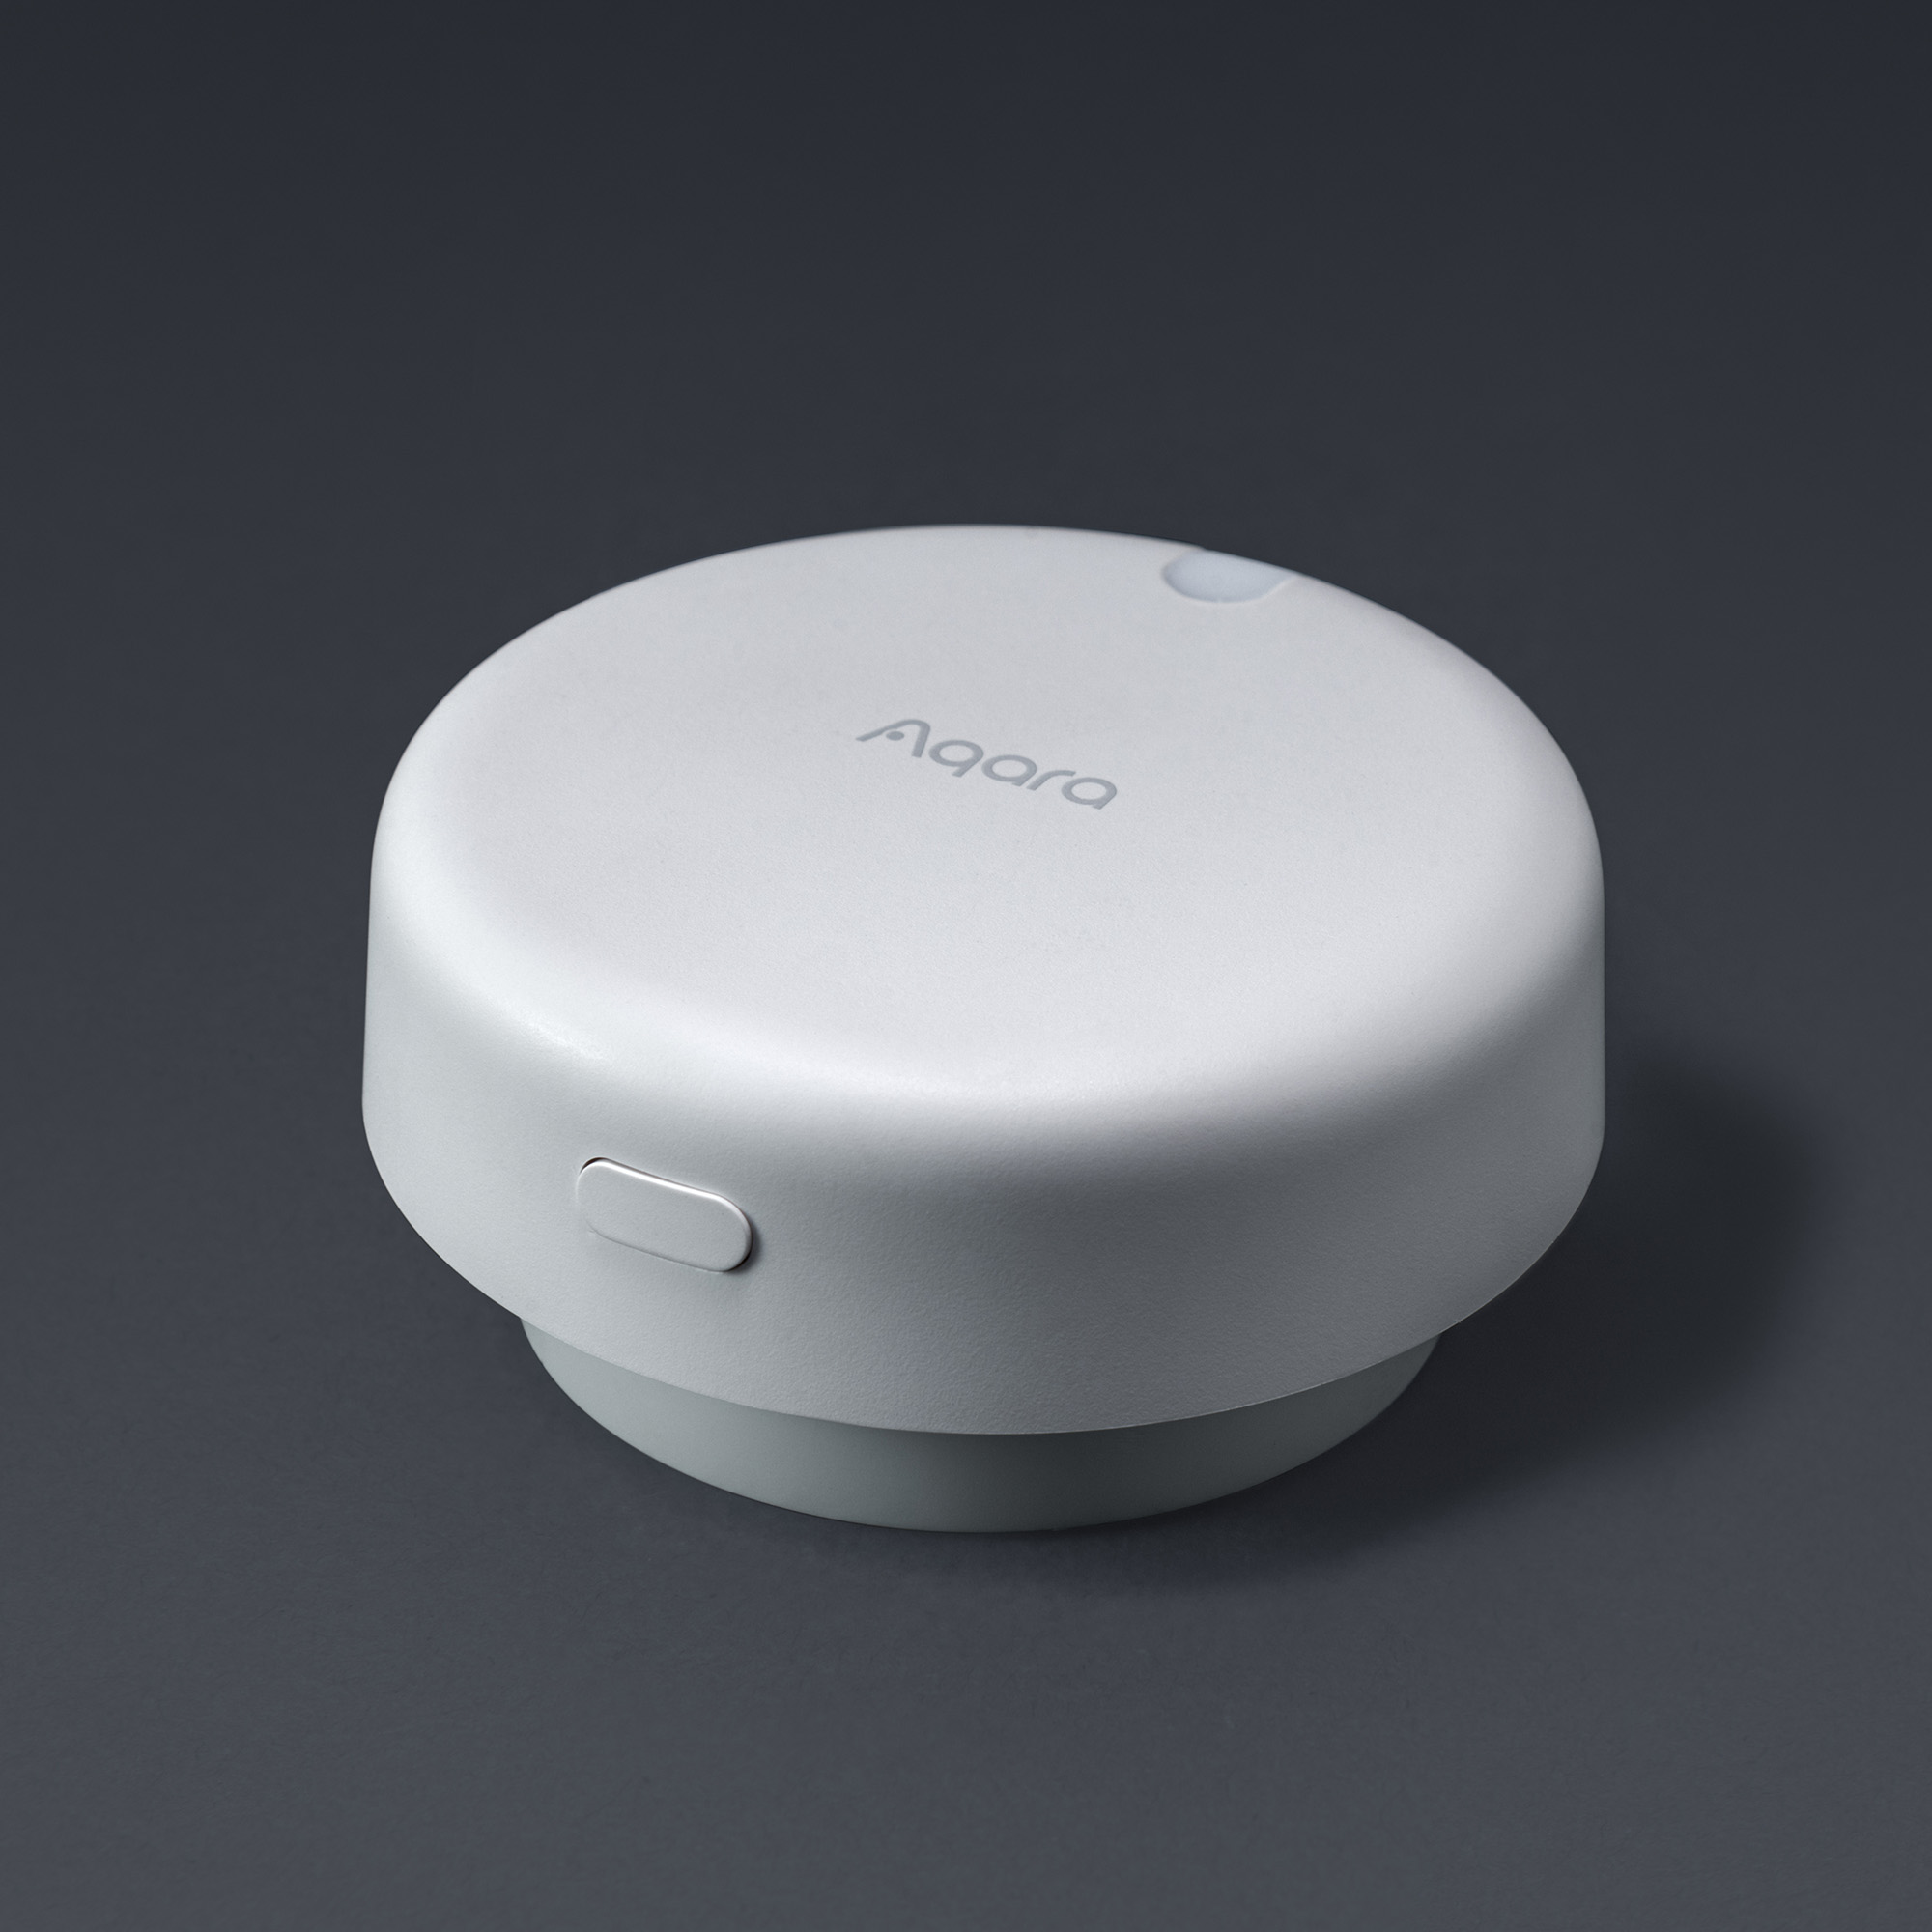 Aqara Adds Presence Sensor FP2 to its Smart Sensor Portfolio - Aqara